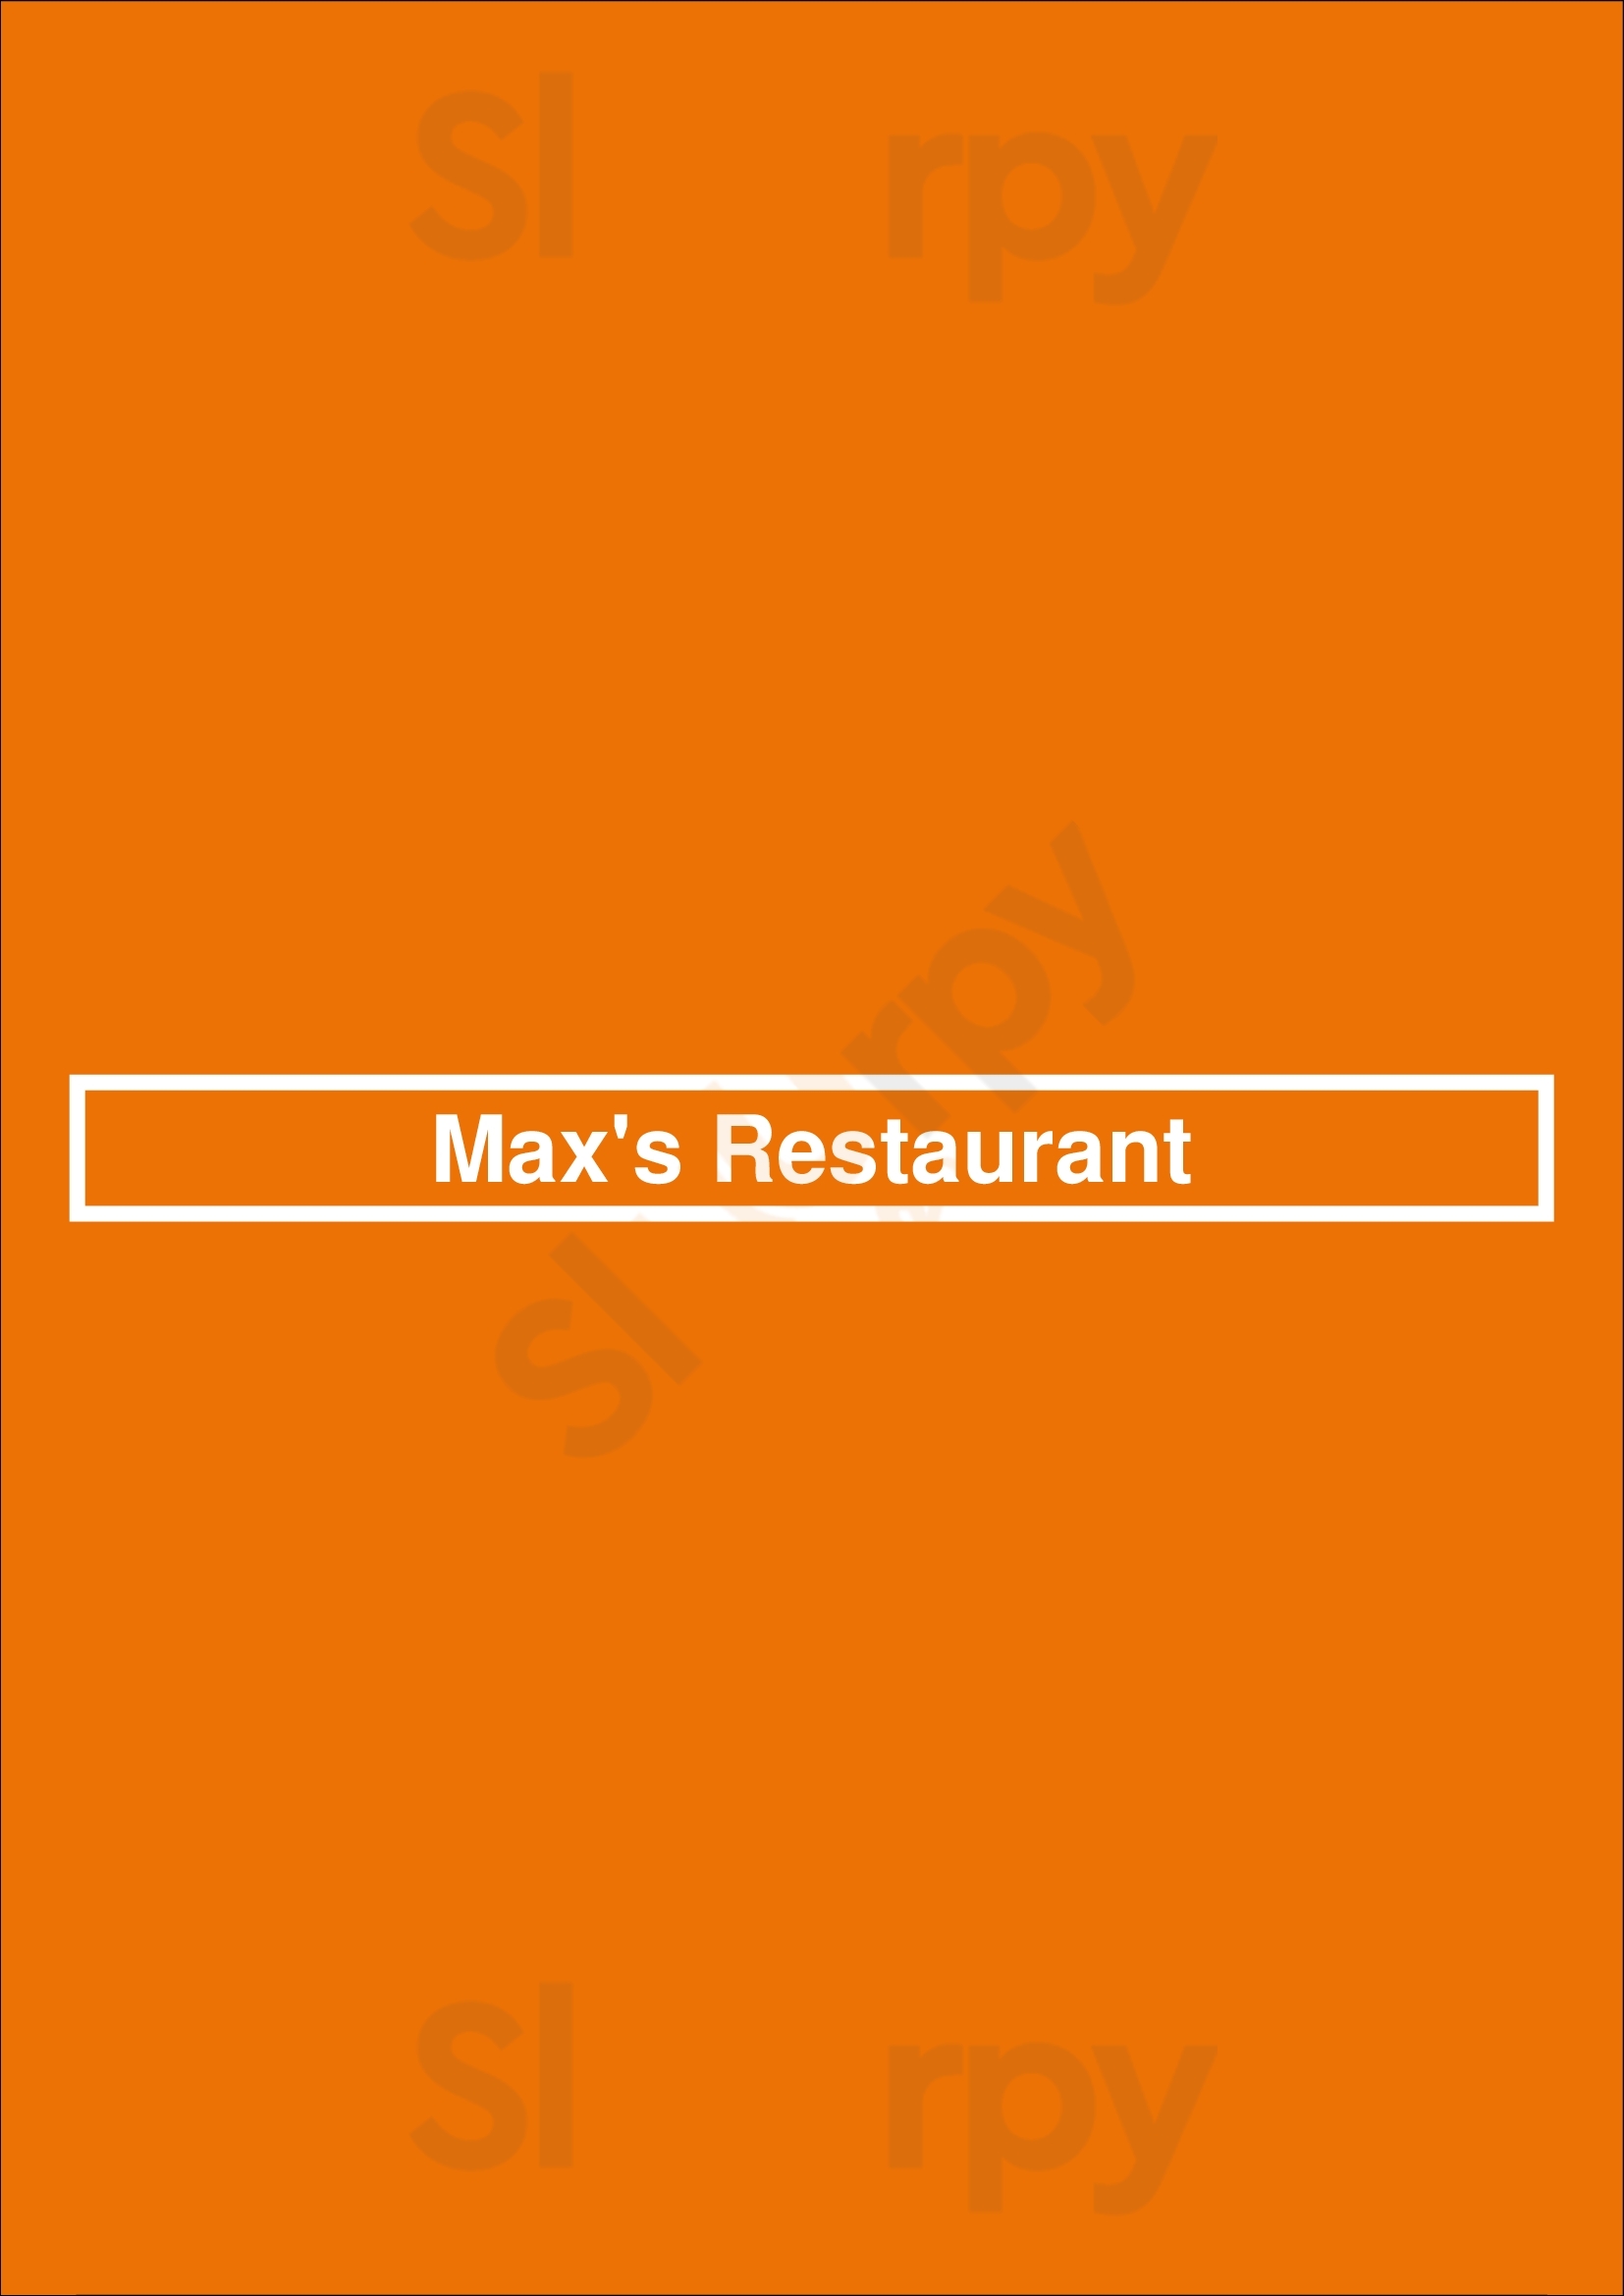 Max's Restaurant Calgary Menu - 1